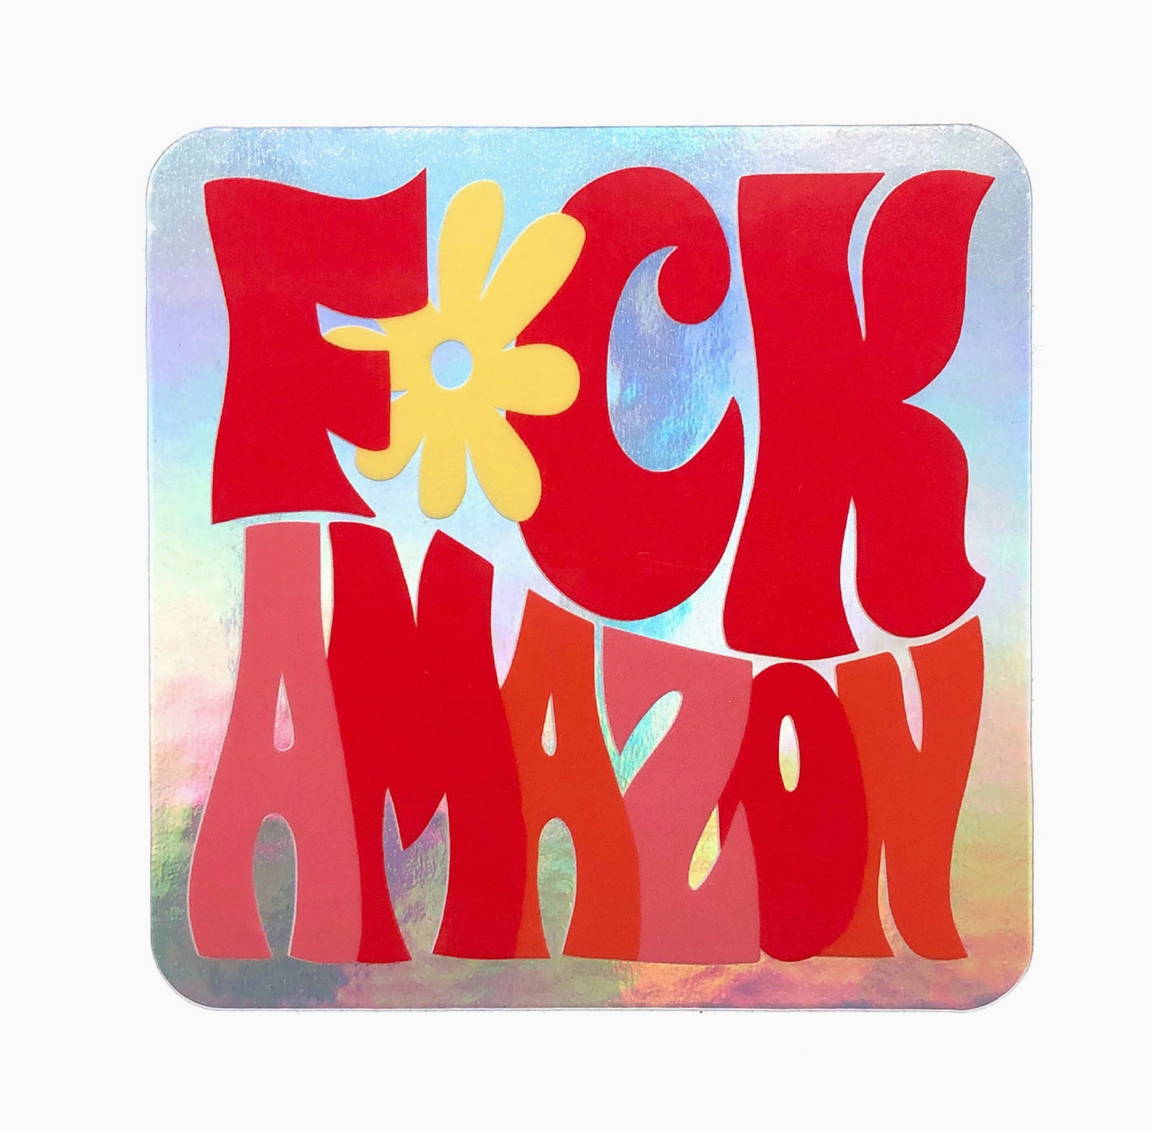 Fuck Amazon Holographic Sticker